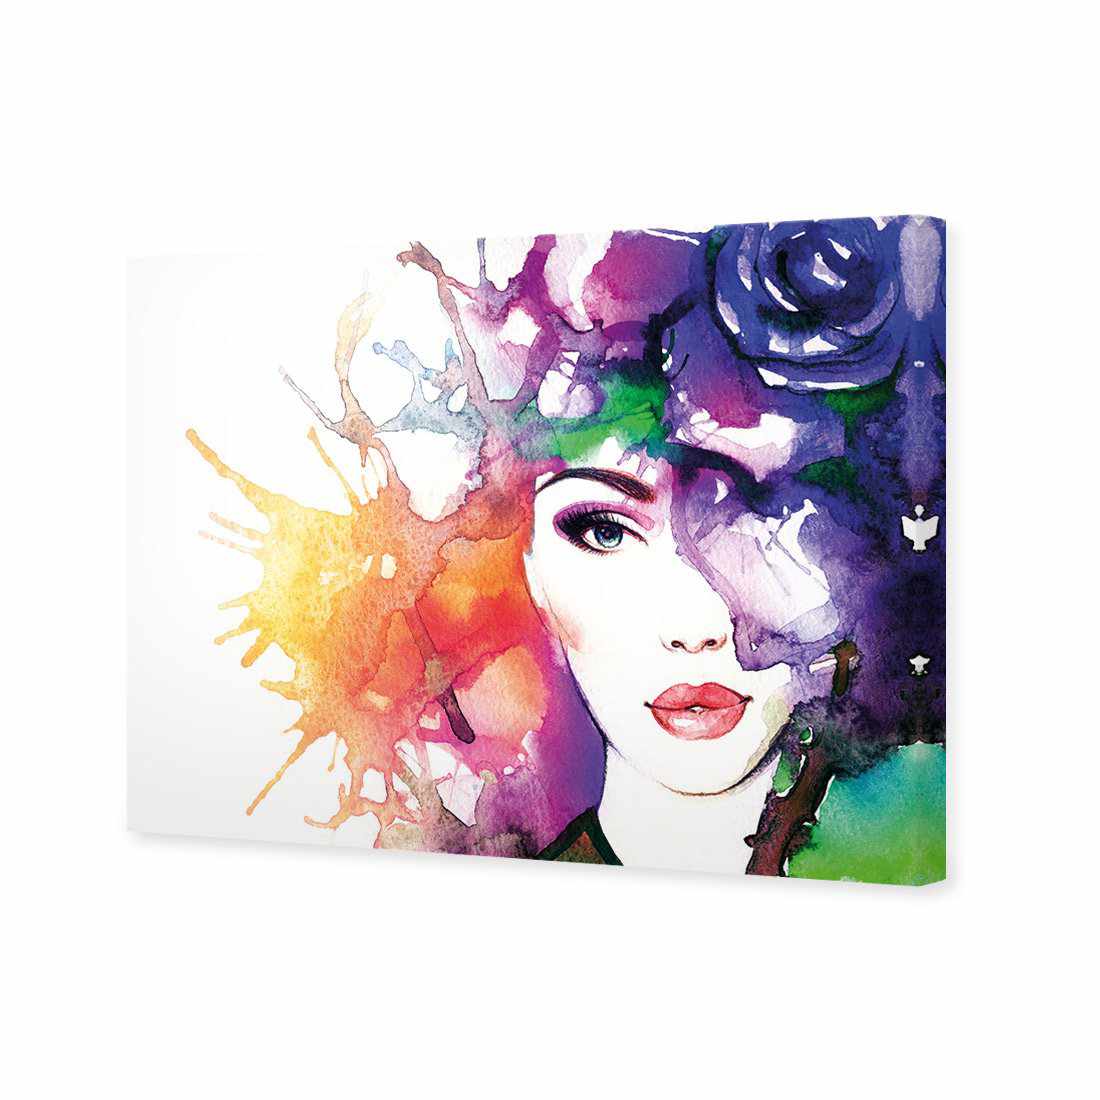 Mystic Rose Woman 2 Canvas Art-Canvas-Wall Art Designs-45x30cm-Canvas - No Frame-Wall Art Designs